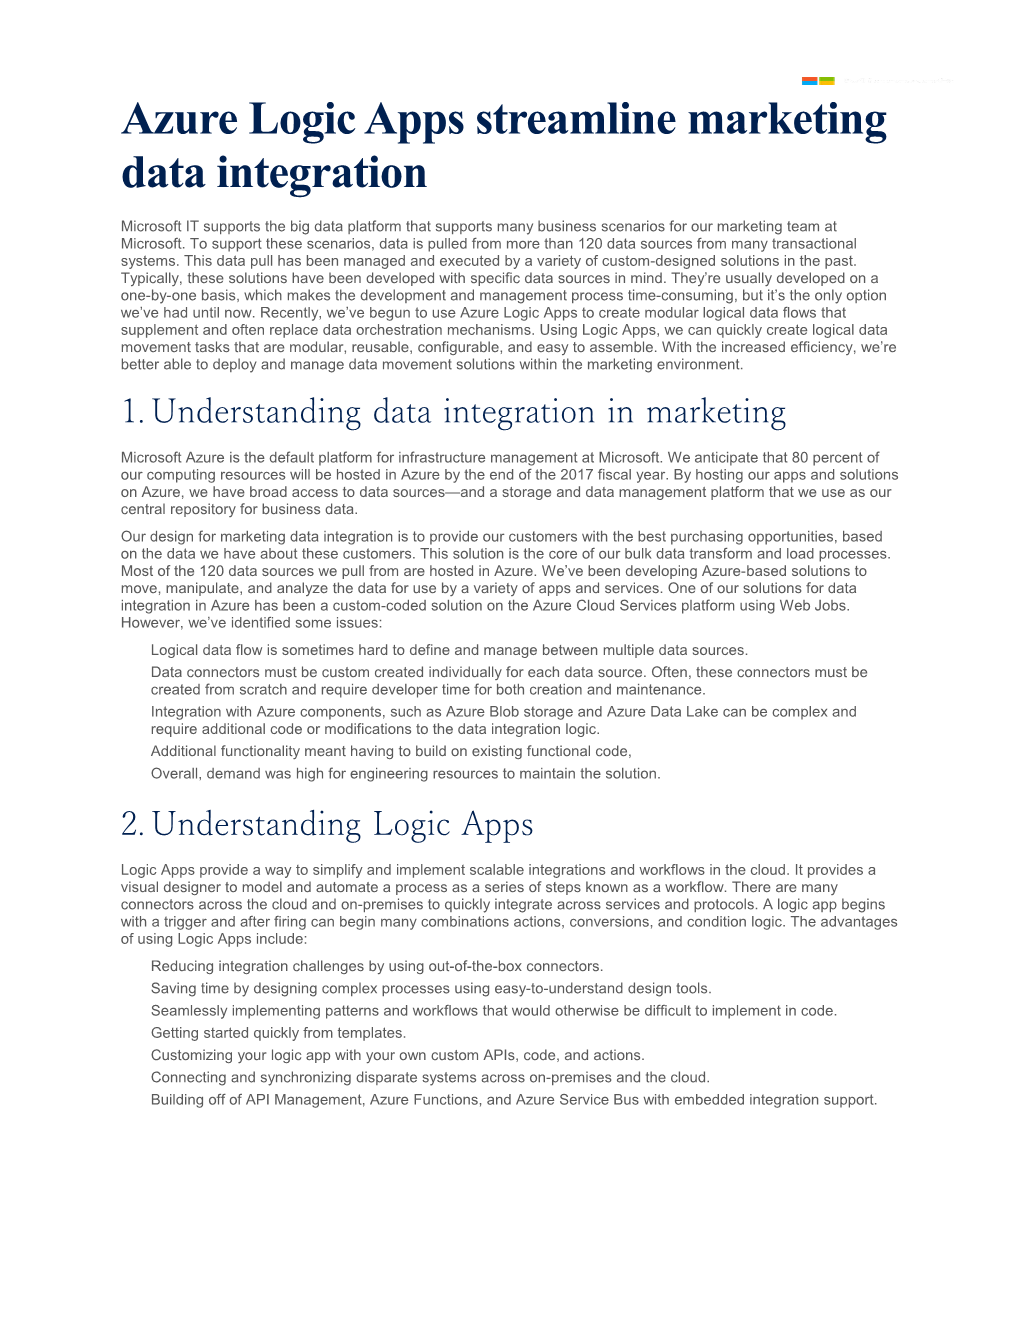 Azure Logic Apps Streamline Marketing Data Integration